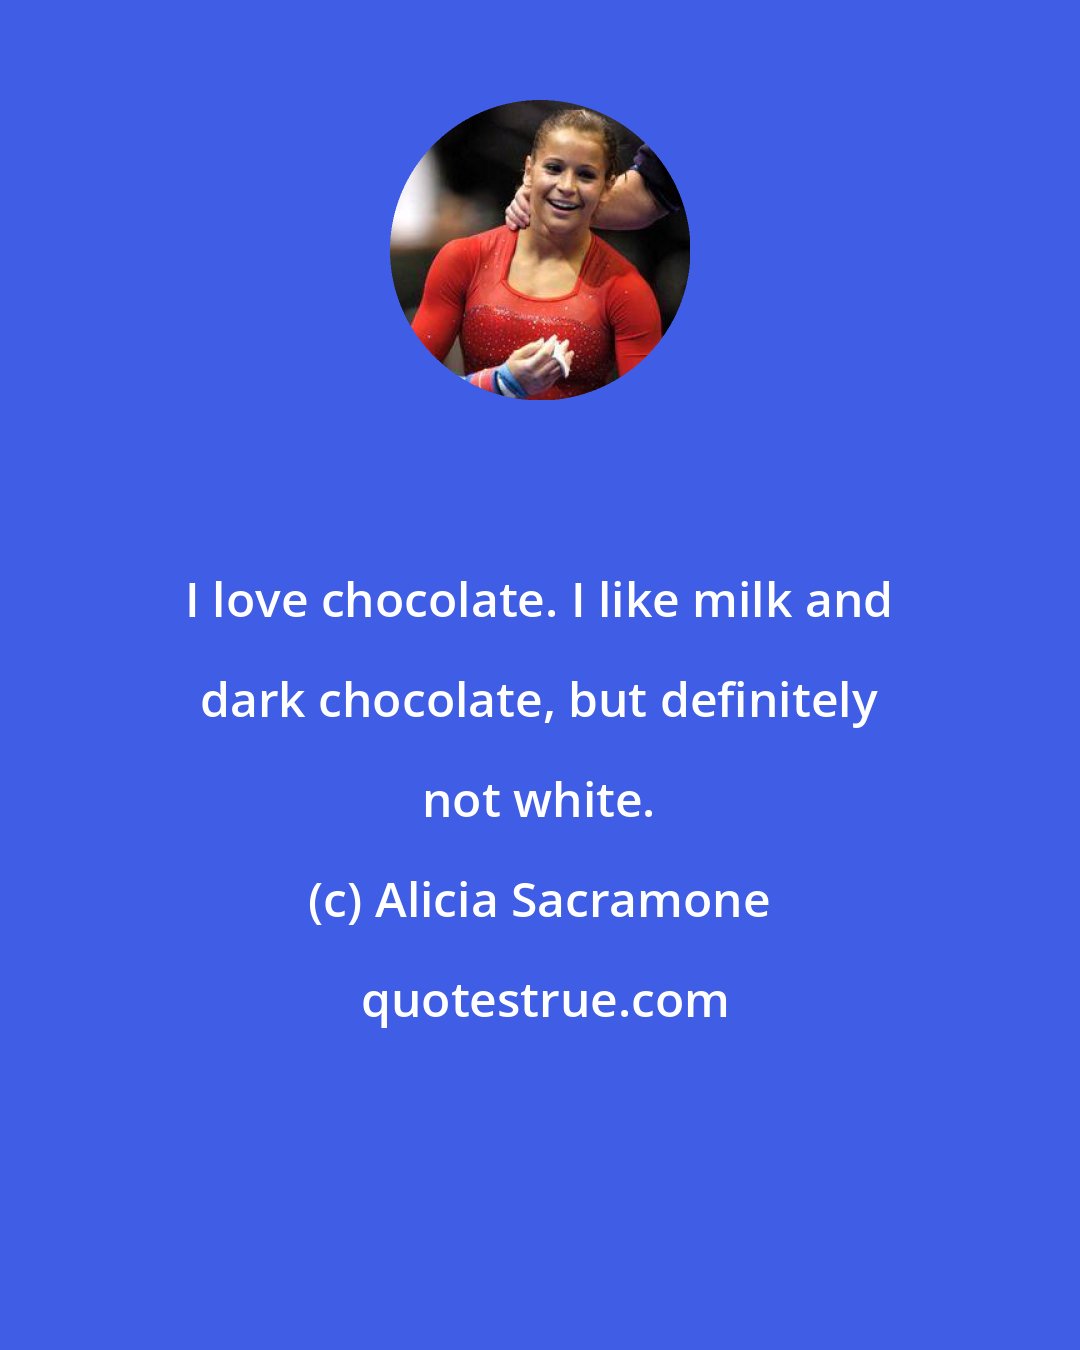 Alicia Sacramone: I love chocolate. I like milk and dark chocolate, but definitely not white.